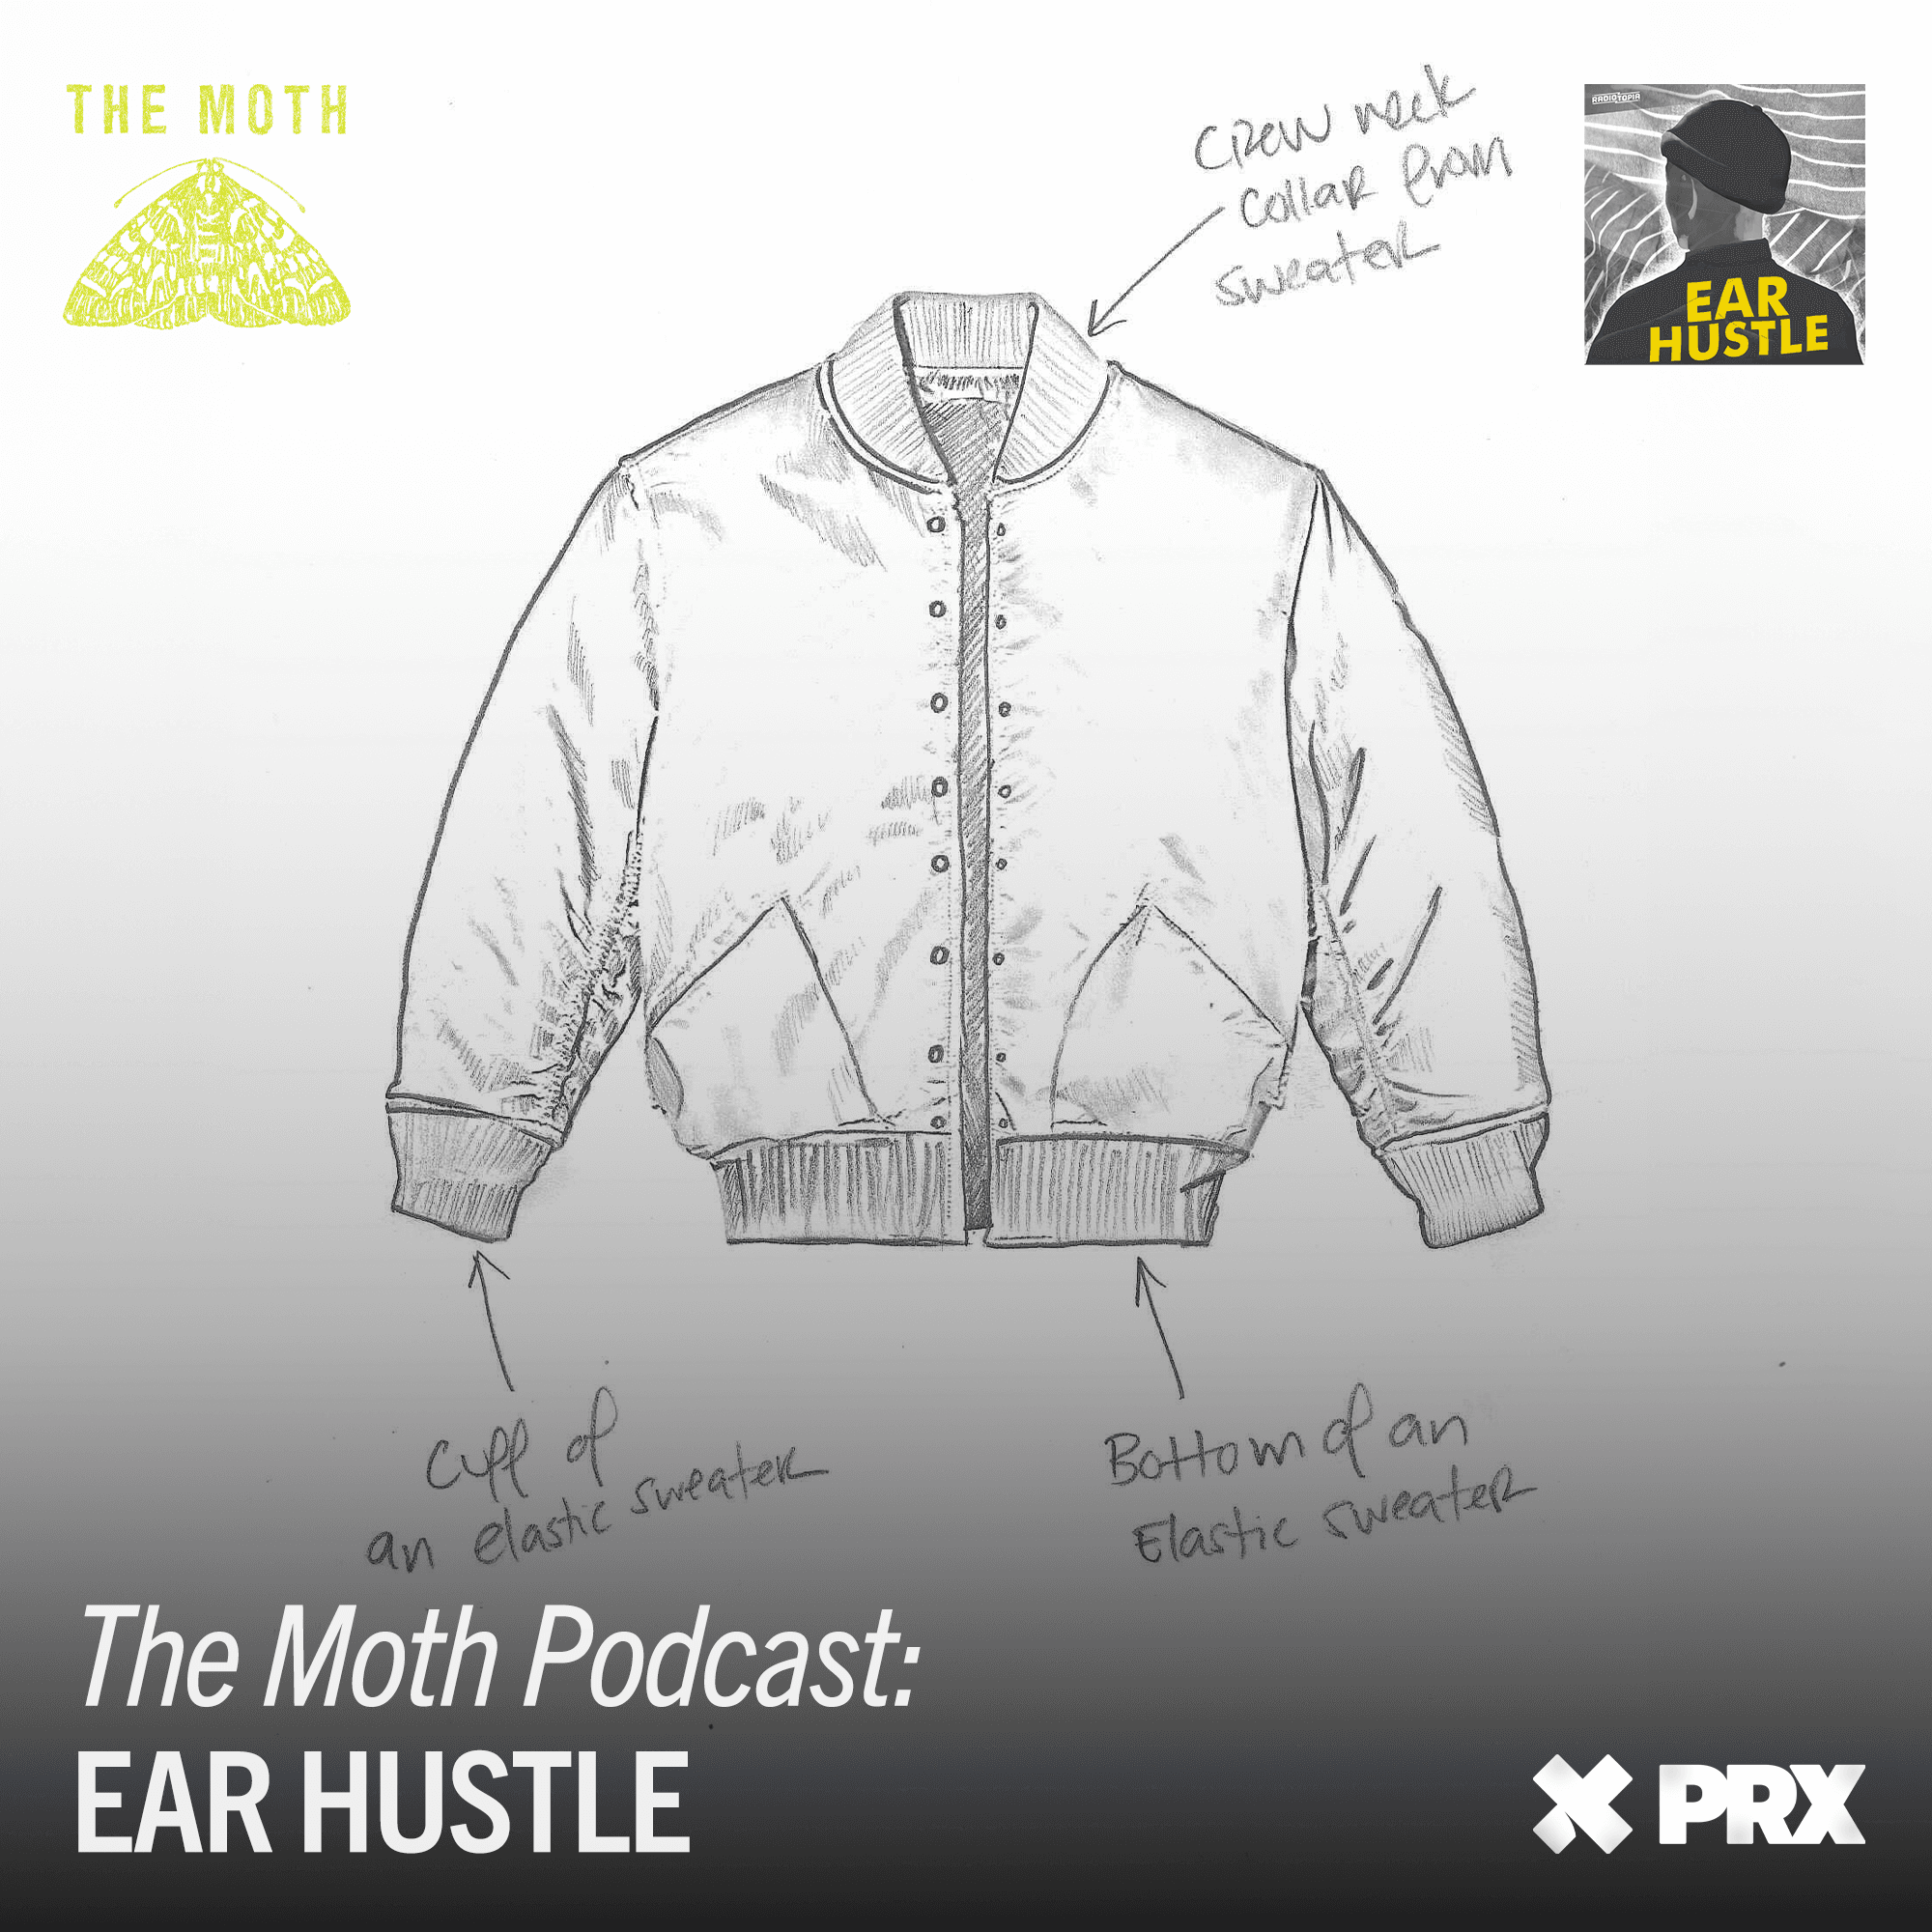 Thumbnail for "The Moth Podcast: Ear Hustle".